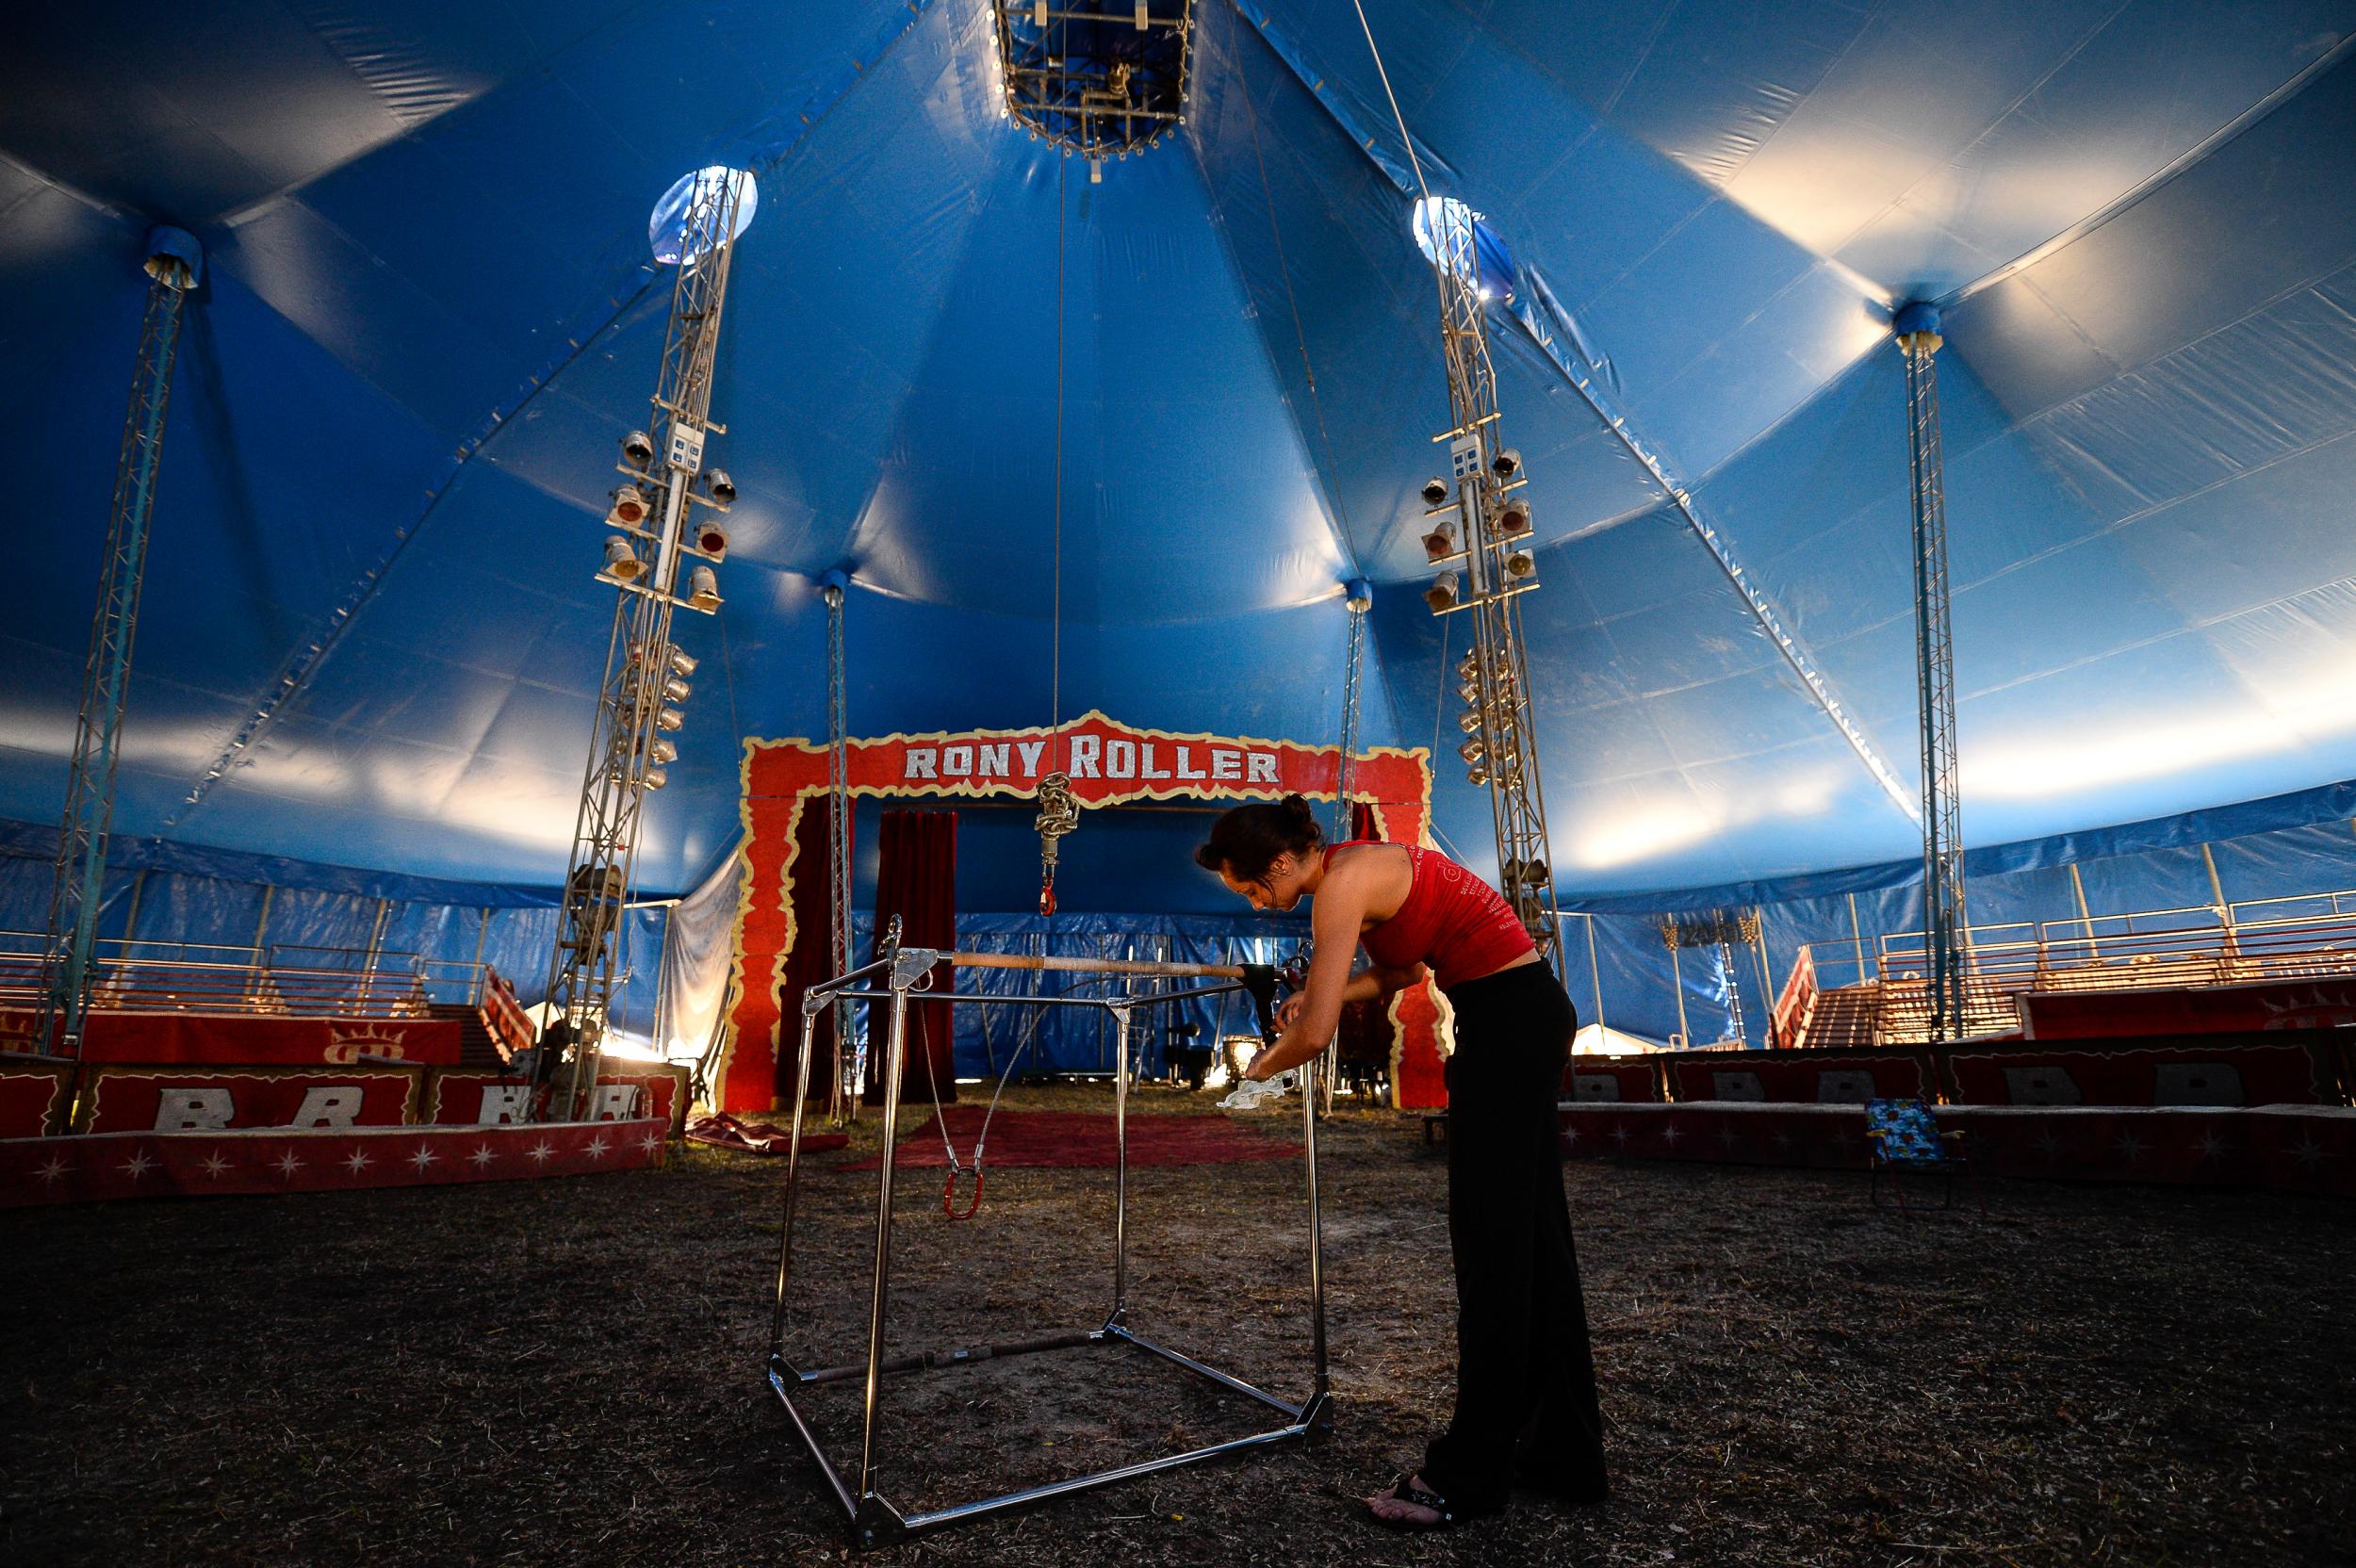 Marina Delicosti, an acrobat in Rony Roller’s Circus, prepares his equipment